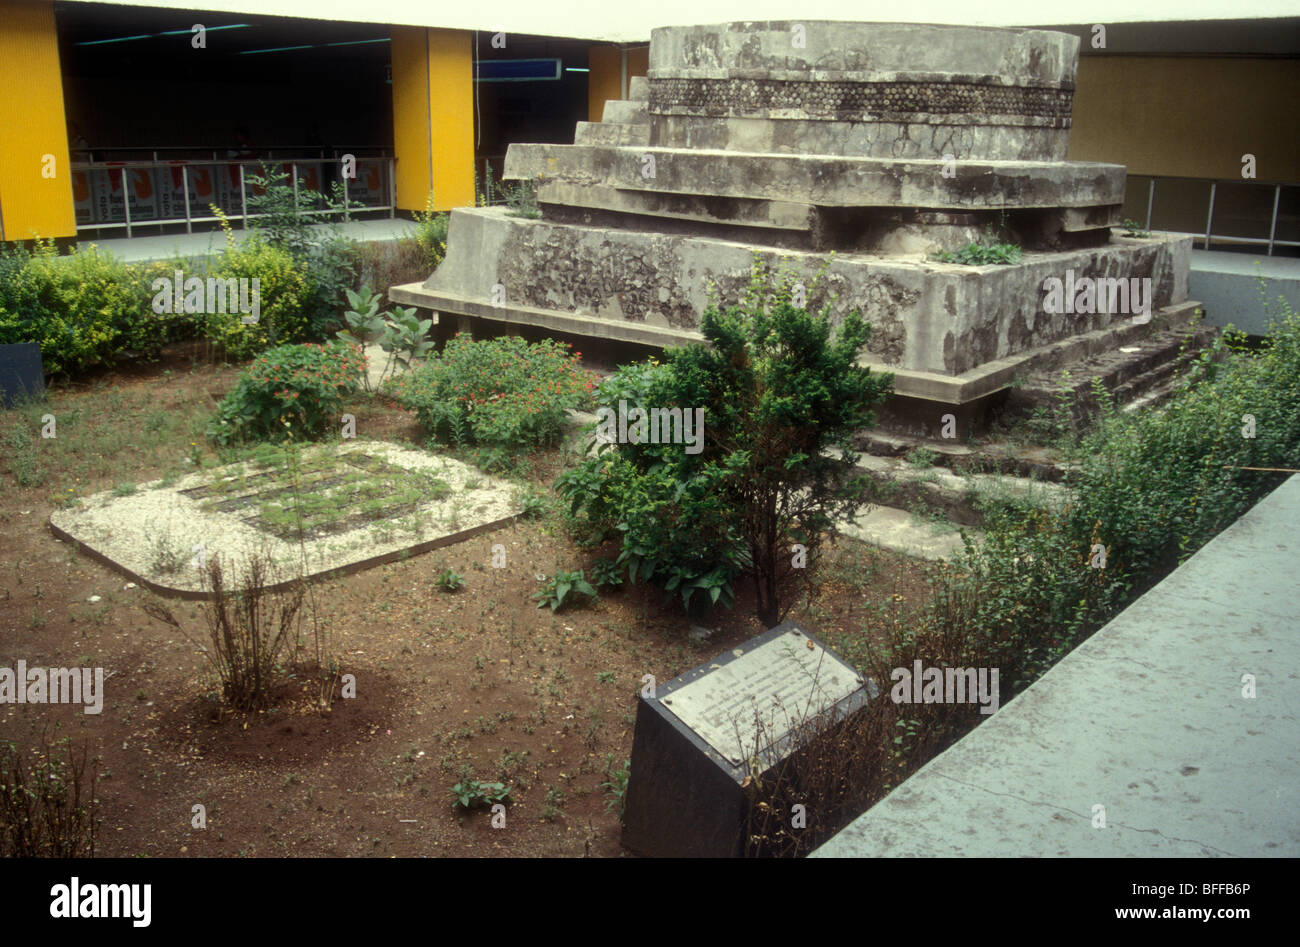 Aztec ruins in the Pino Suarez Metro subway station, Mexico City Stock Photo